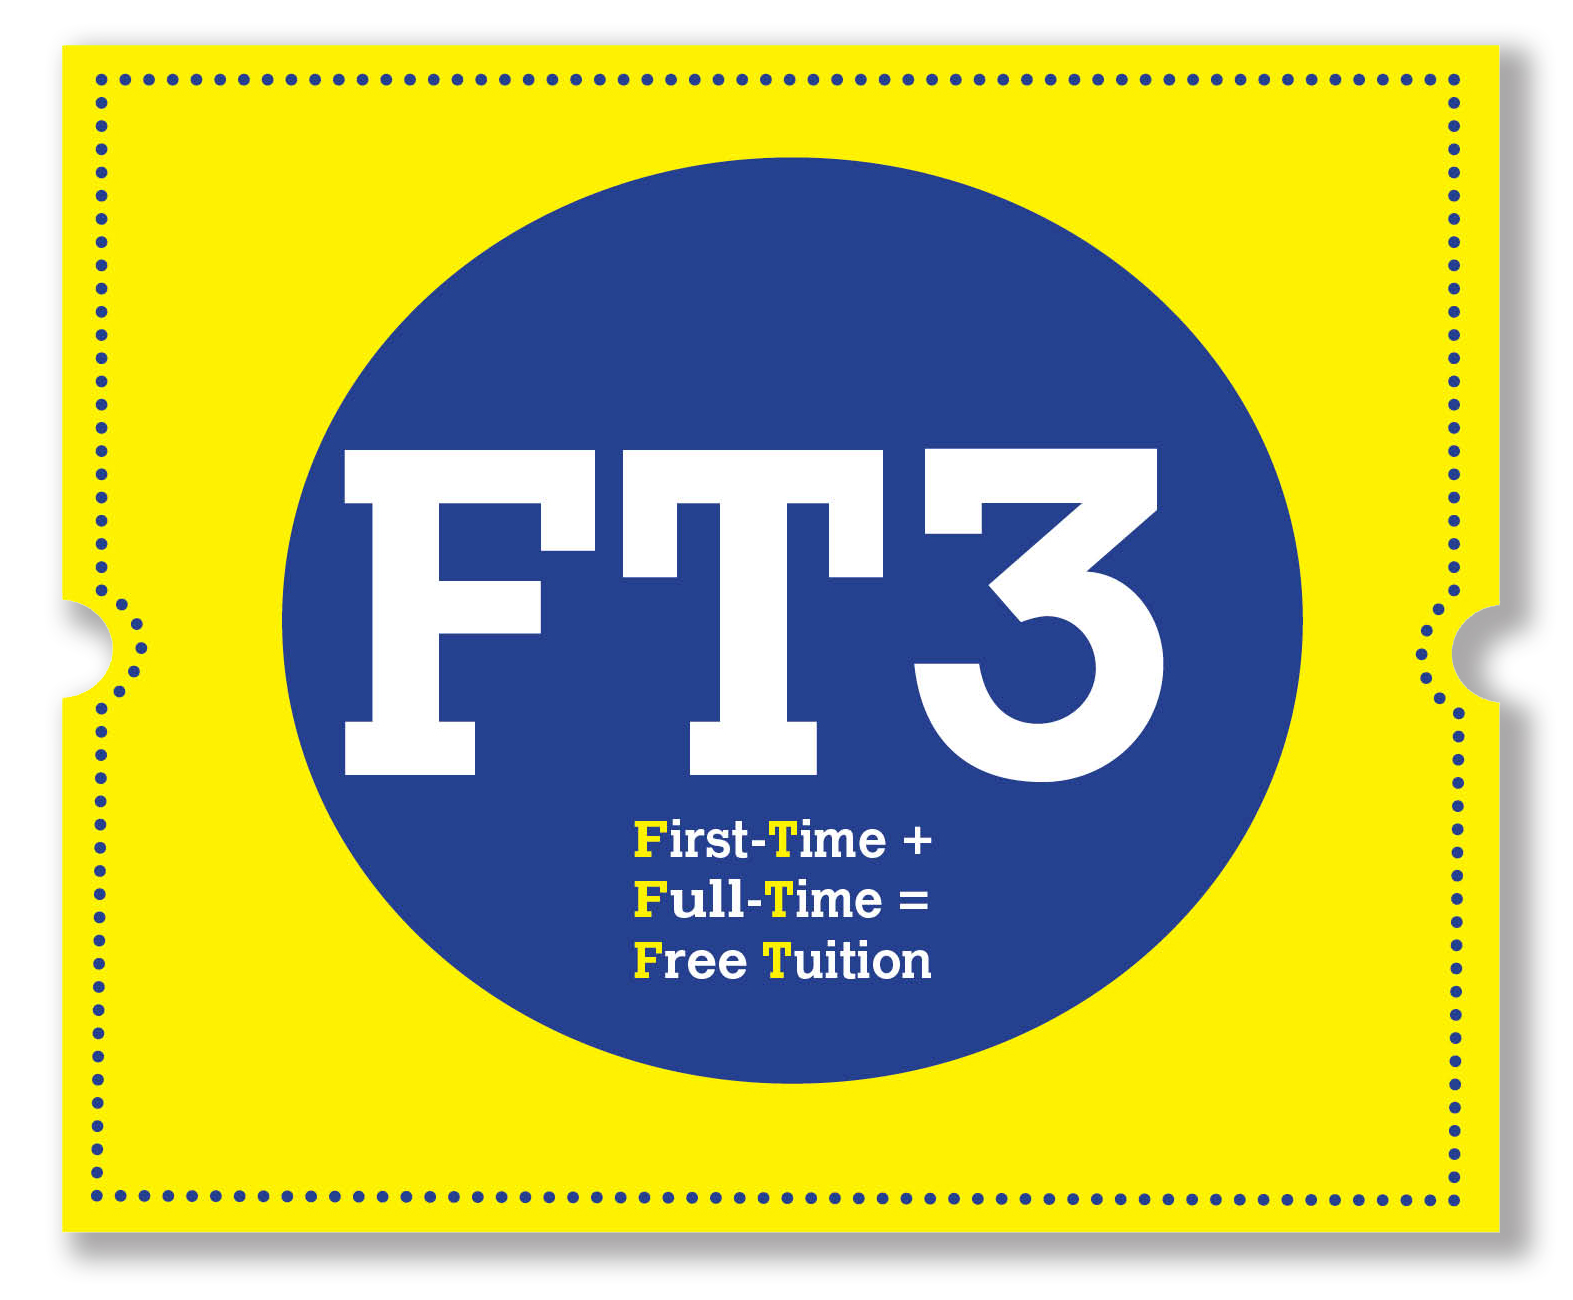 FT3 free tuition program